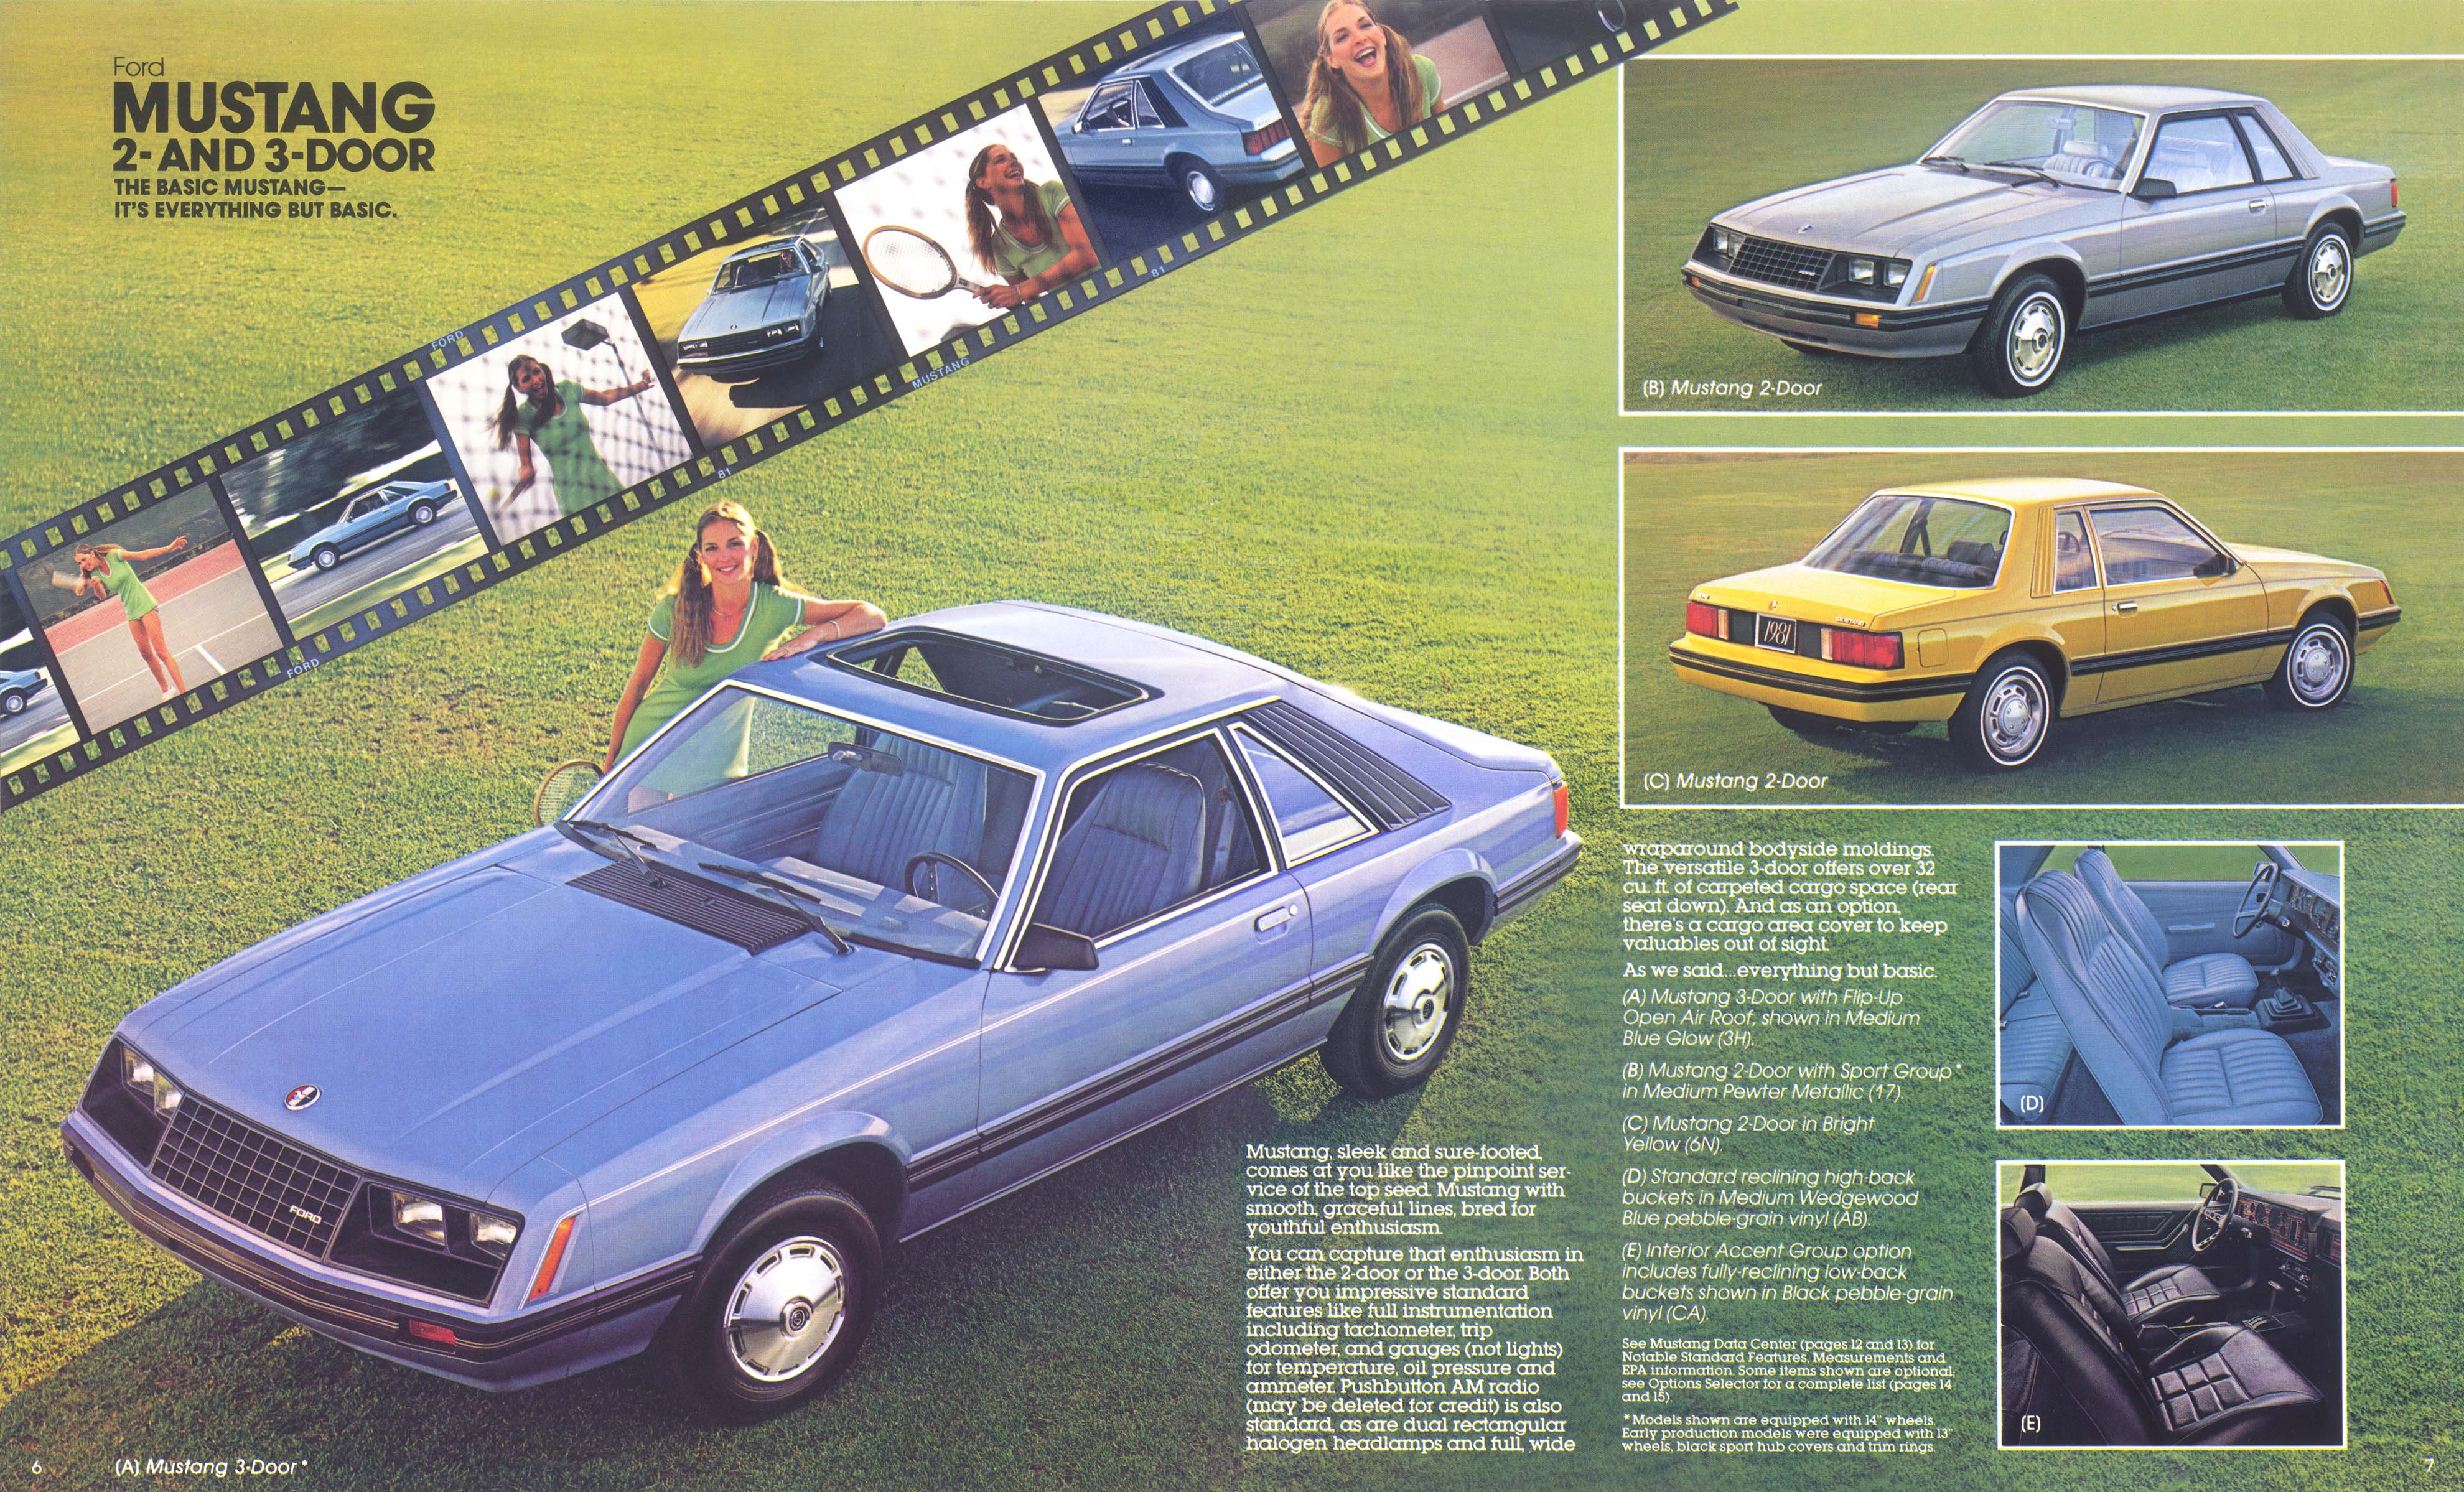 1981_Ford_Mustang_Rev1-06-07